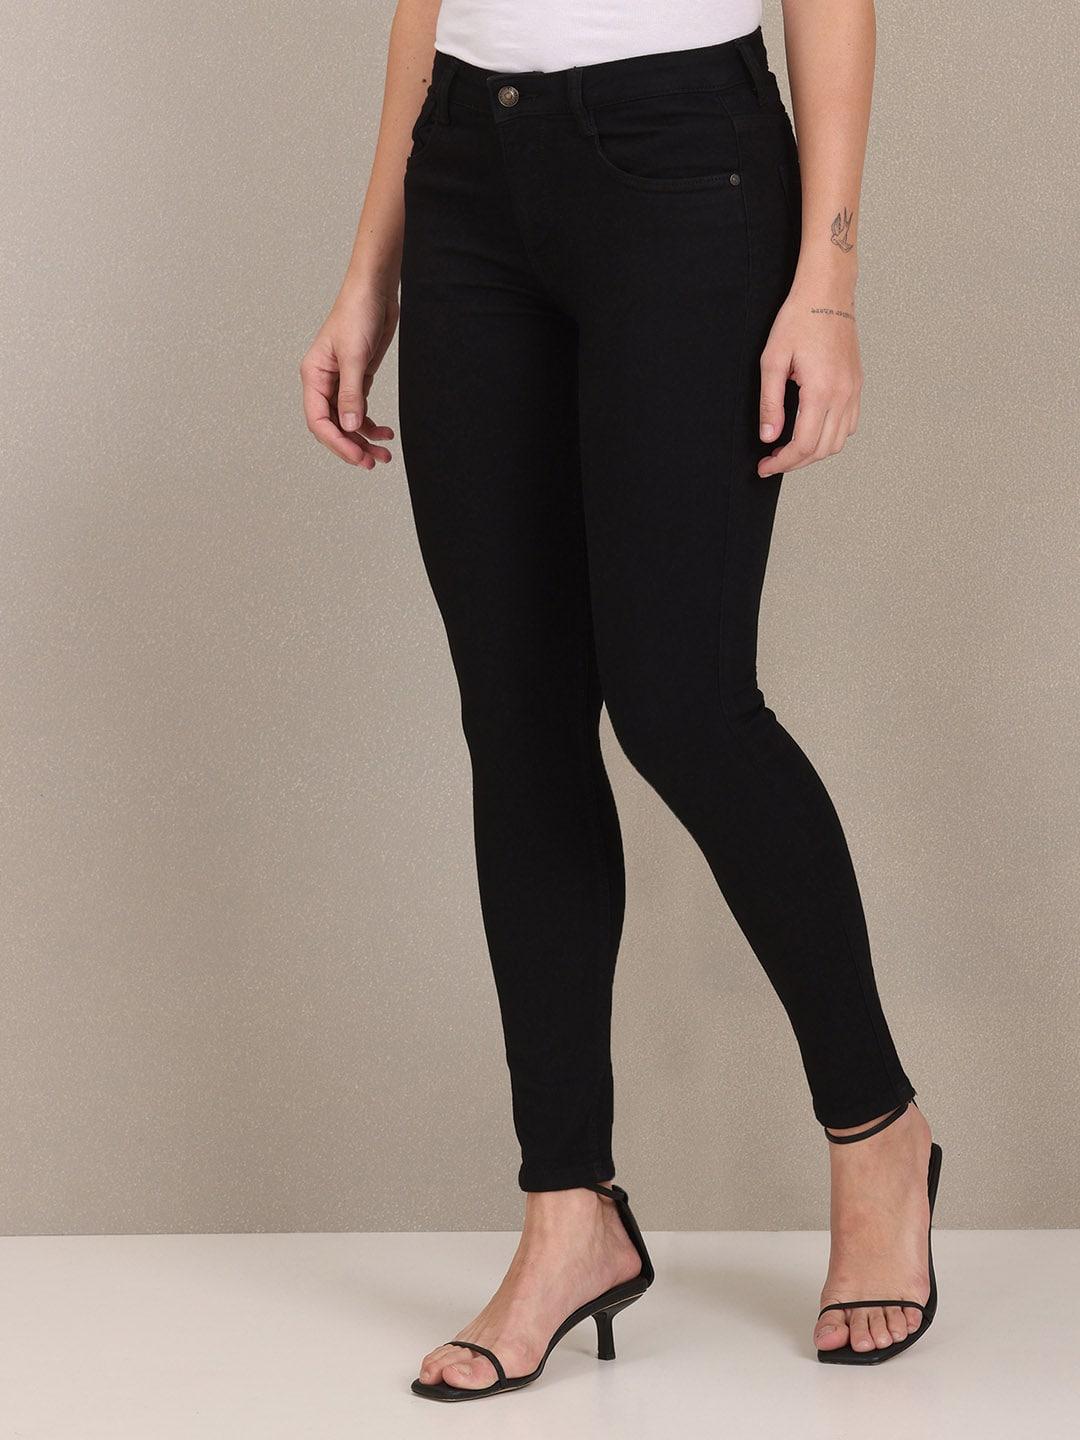 u-s-polo-assn-women-women-black-super-skinny-fit-stretchable-jeans